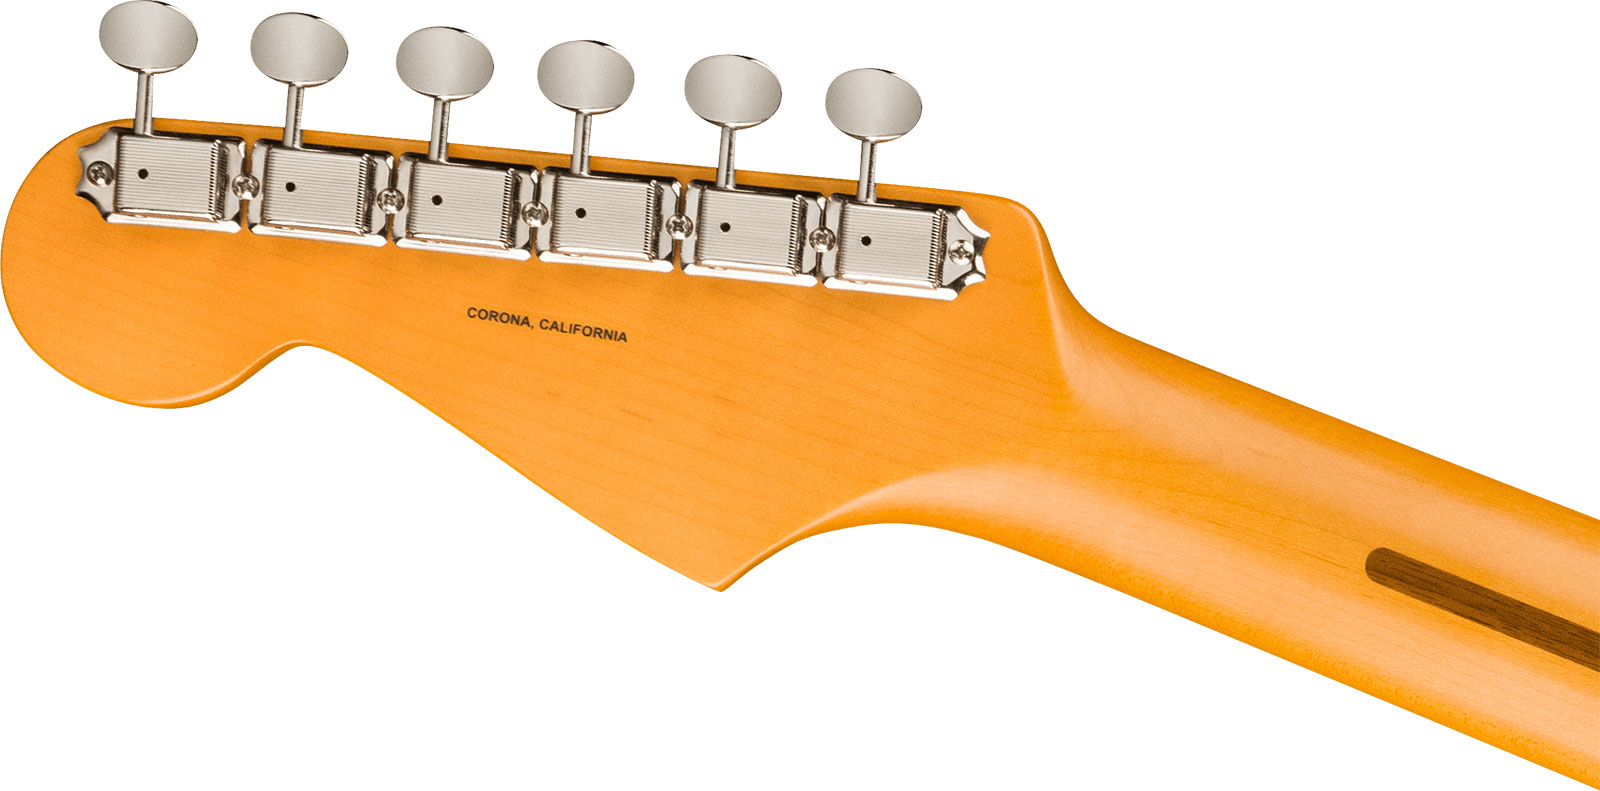 Fender Lincoln Brewster Strat Usa Signature 3s Dimarzio Trem Mn - Olympic Pearl - Retro-rock elektrische gitaar - Variation 3